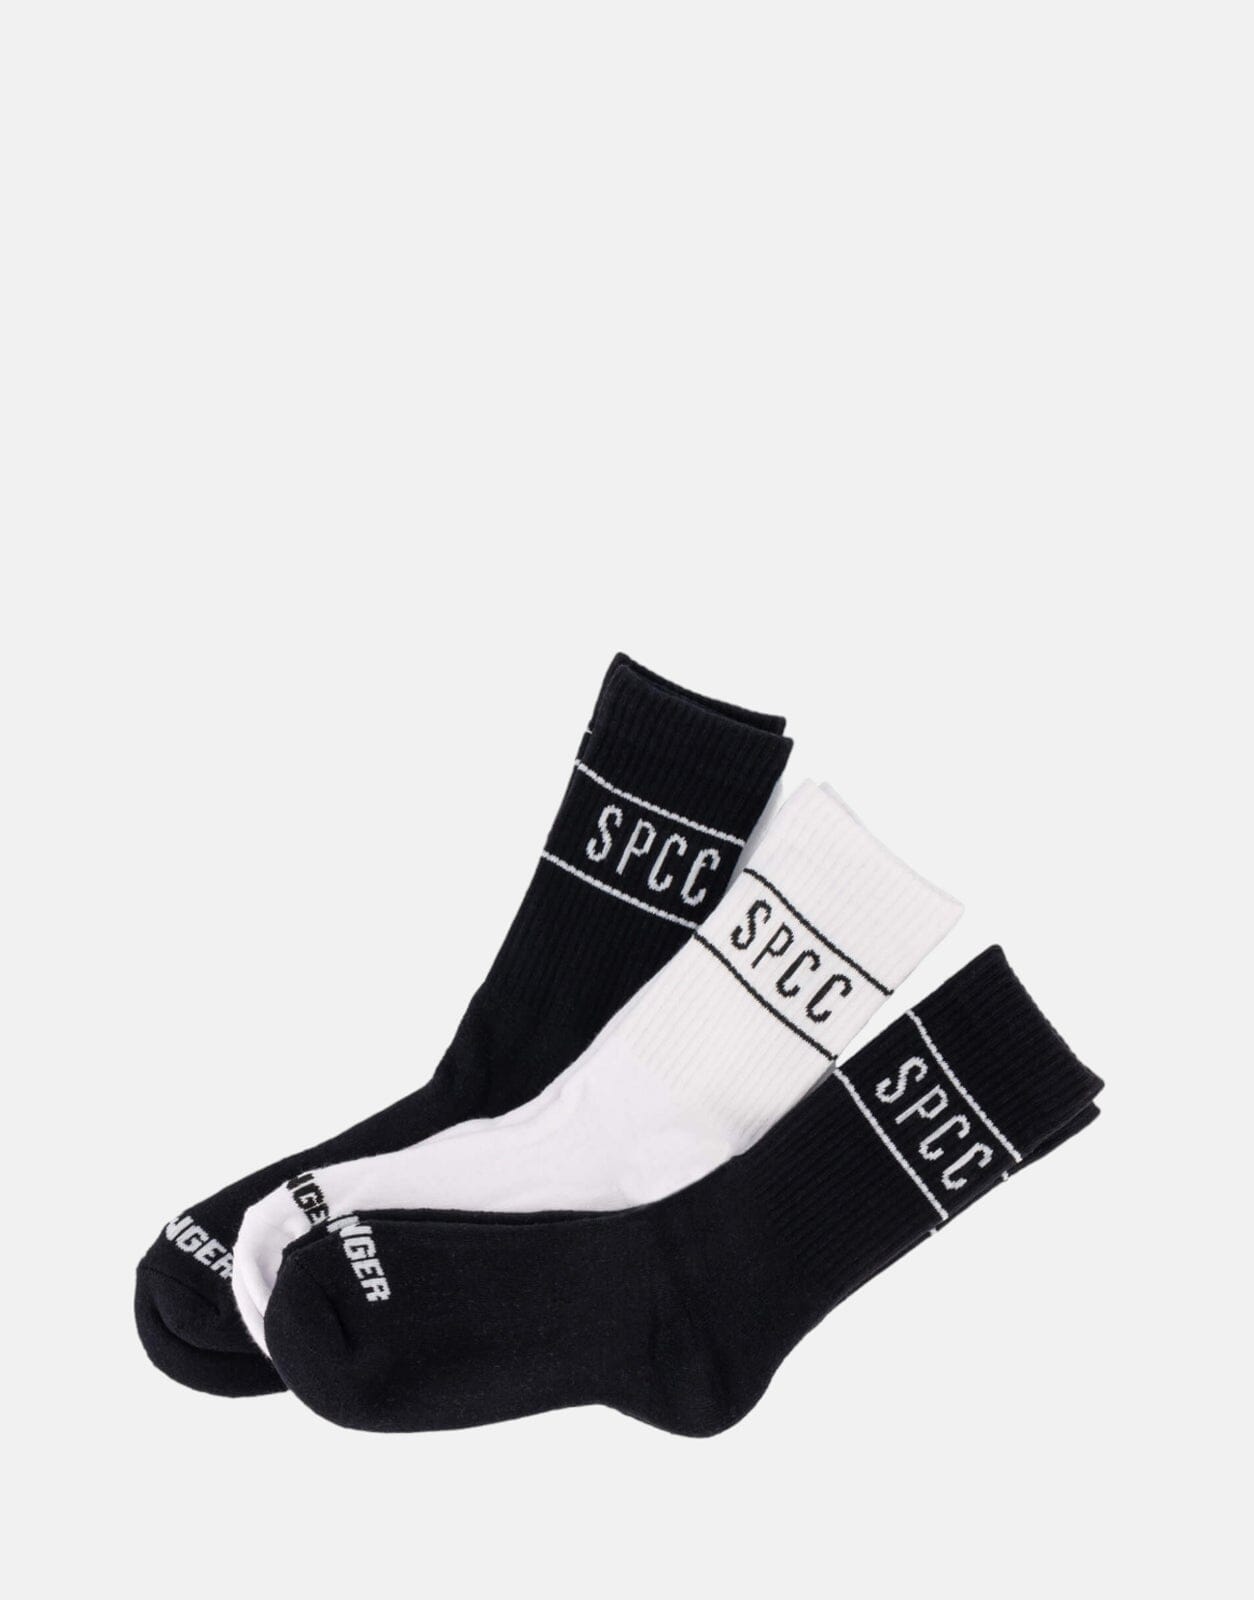 SPCC Declen Black/White Socks - Subwear